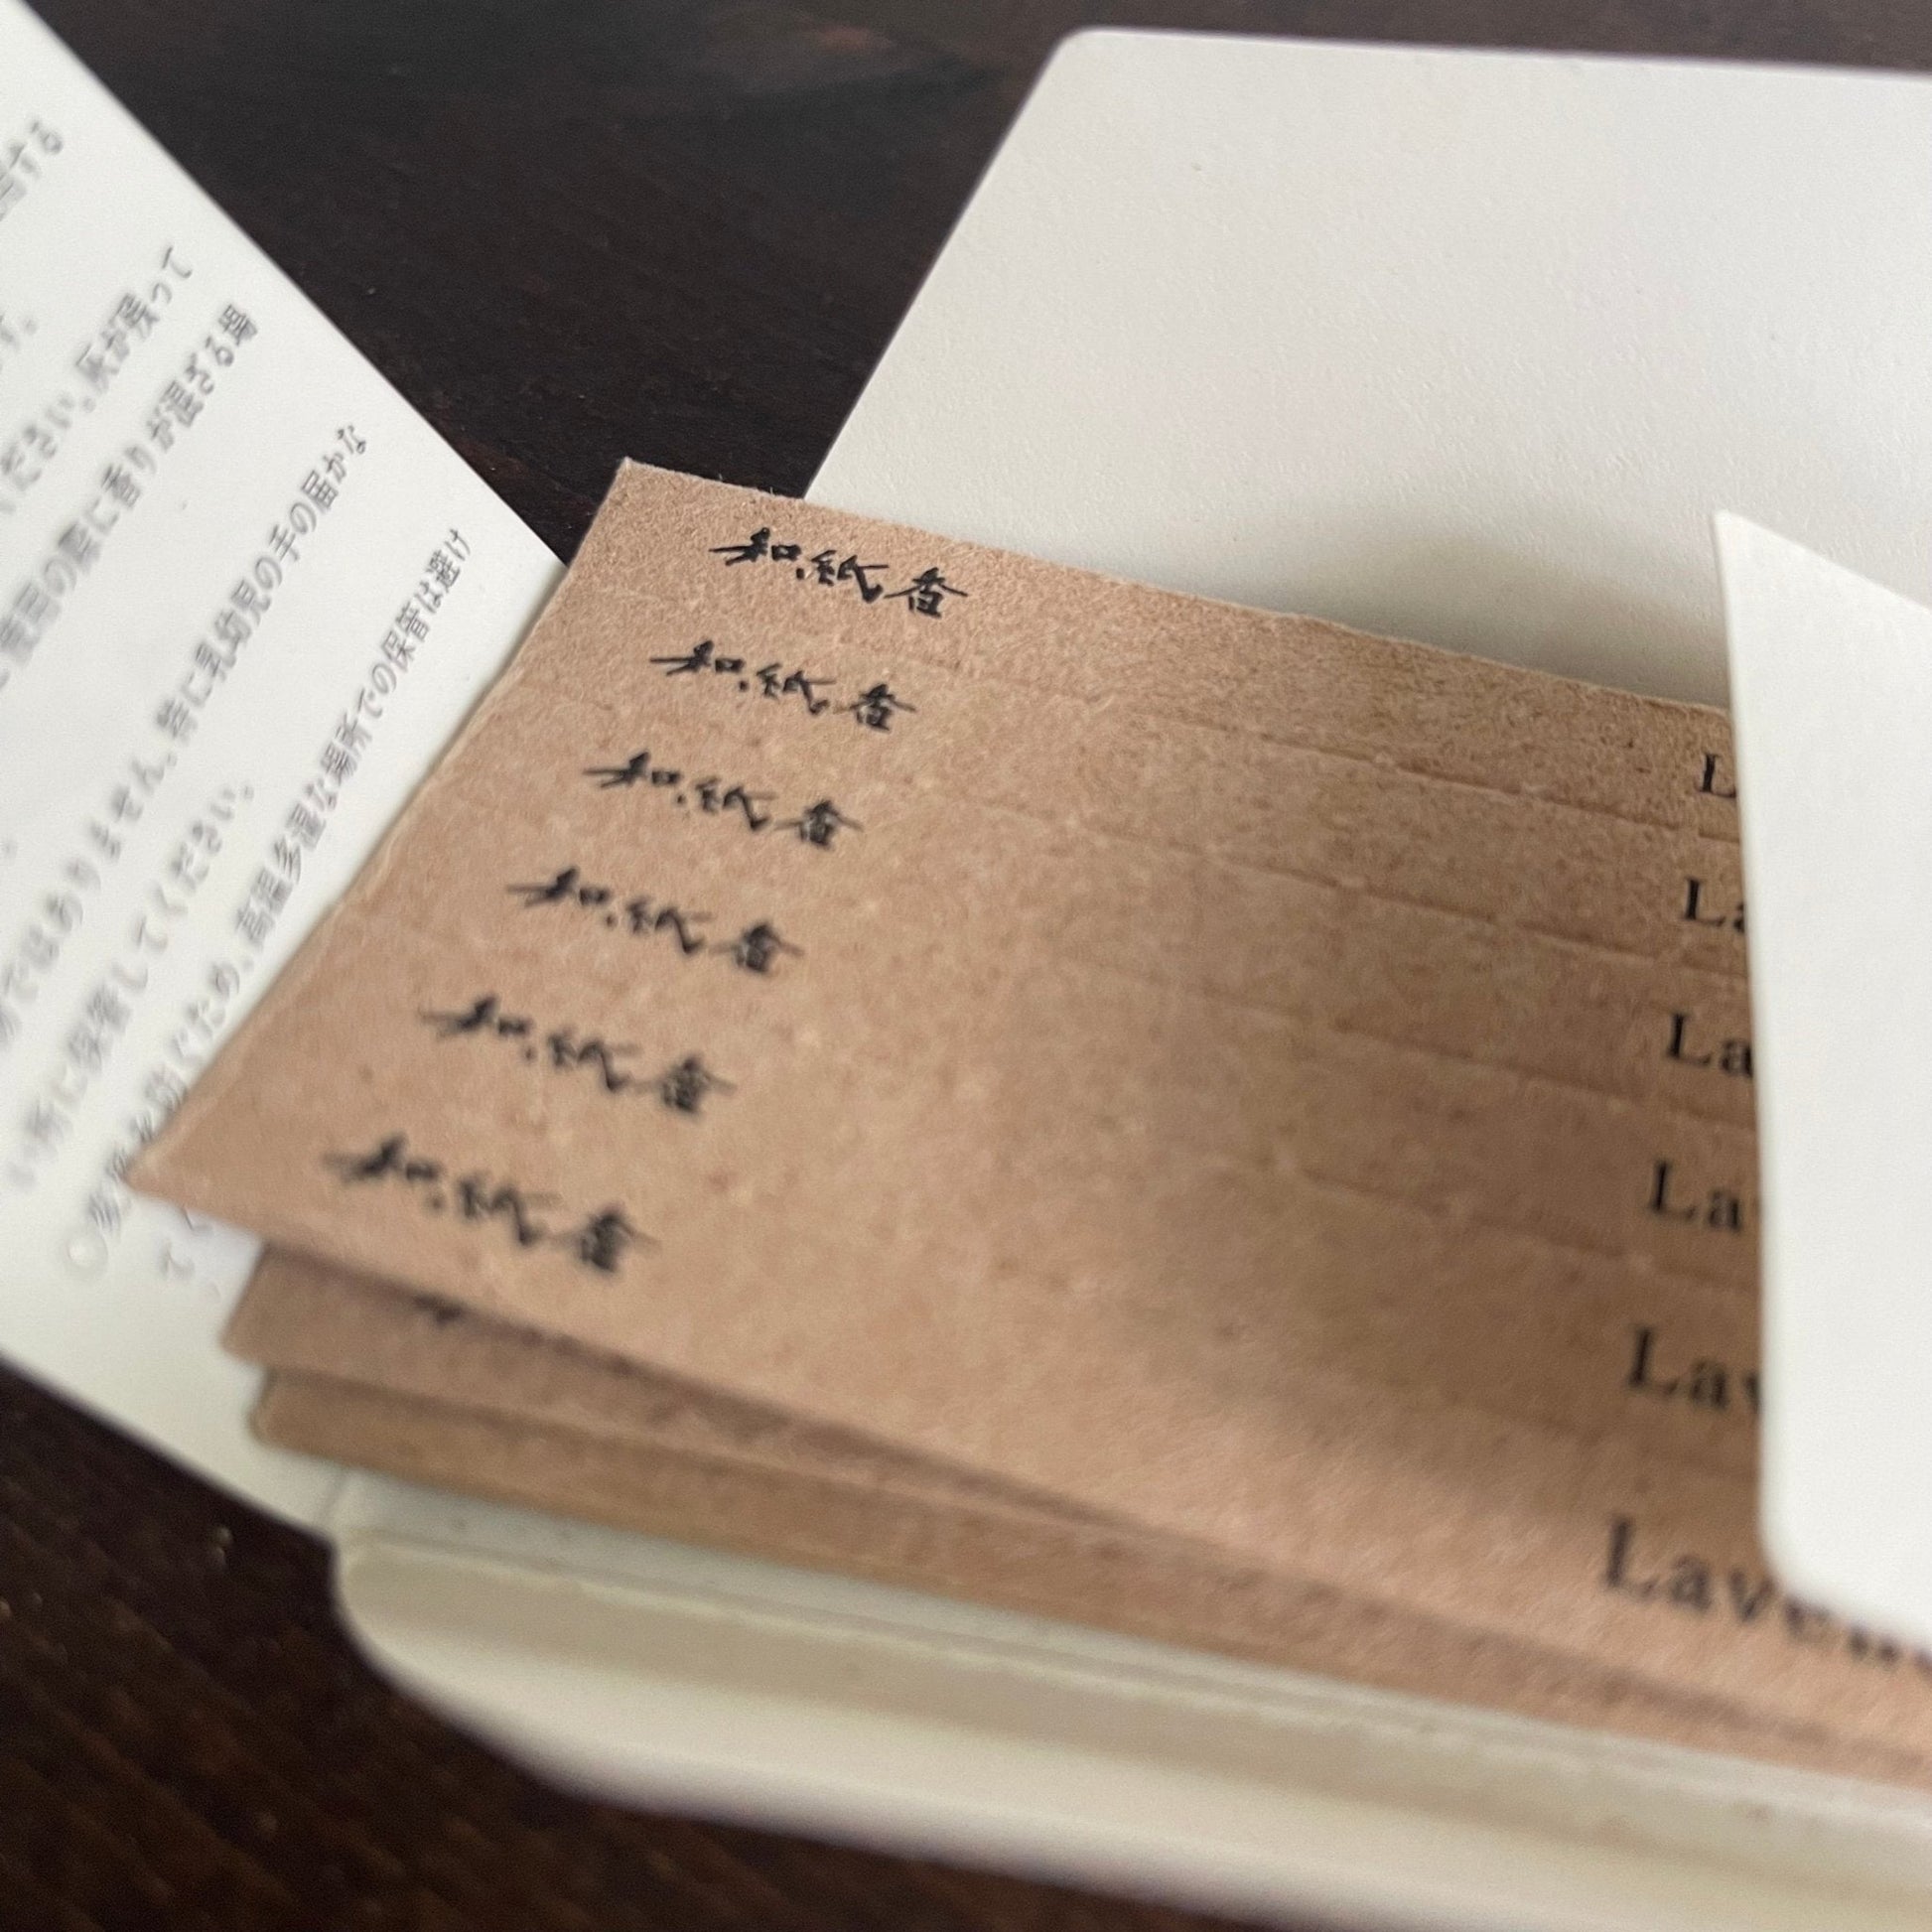 Washikou Washi Paper Incense from Awajishima — Sage